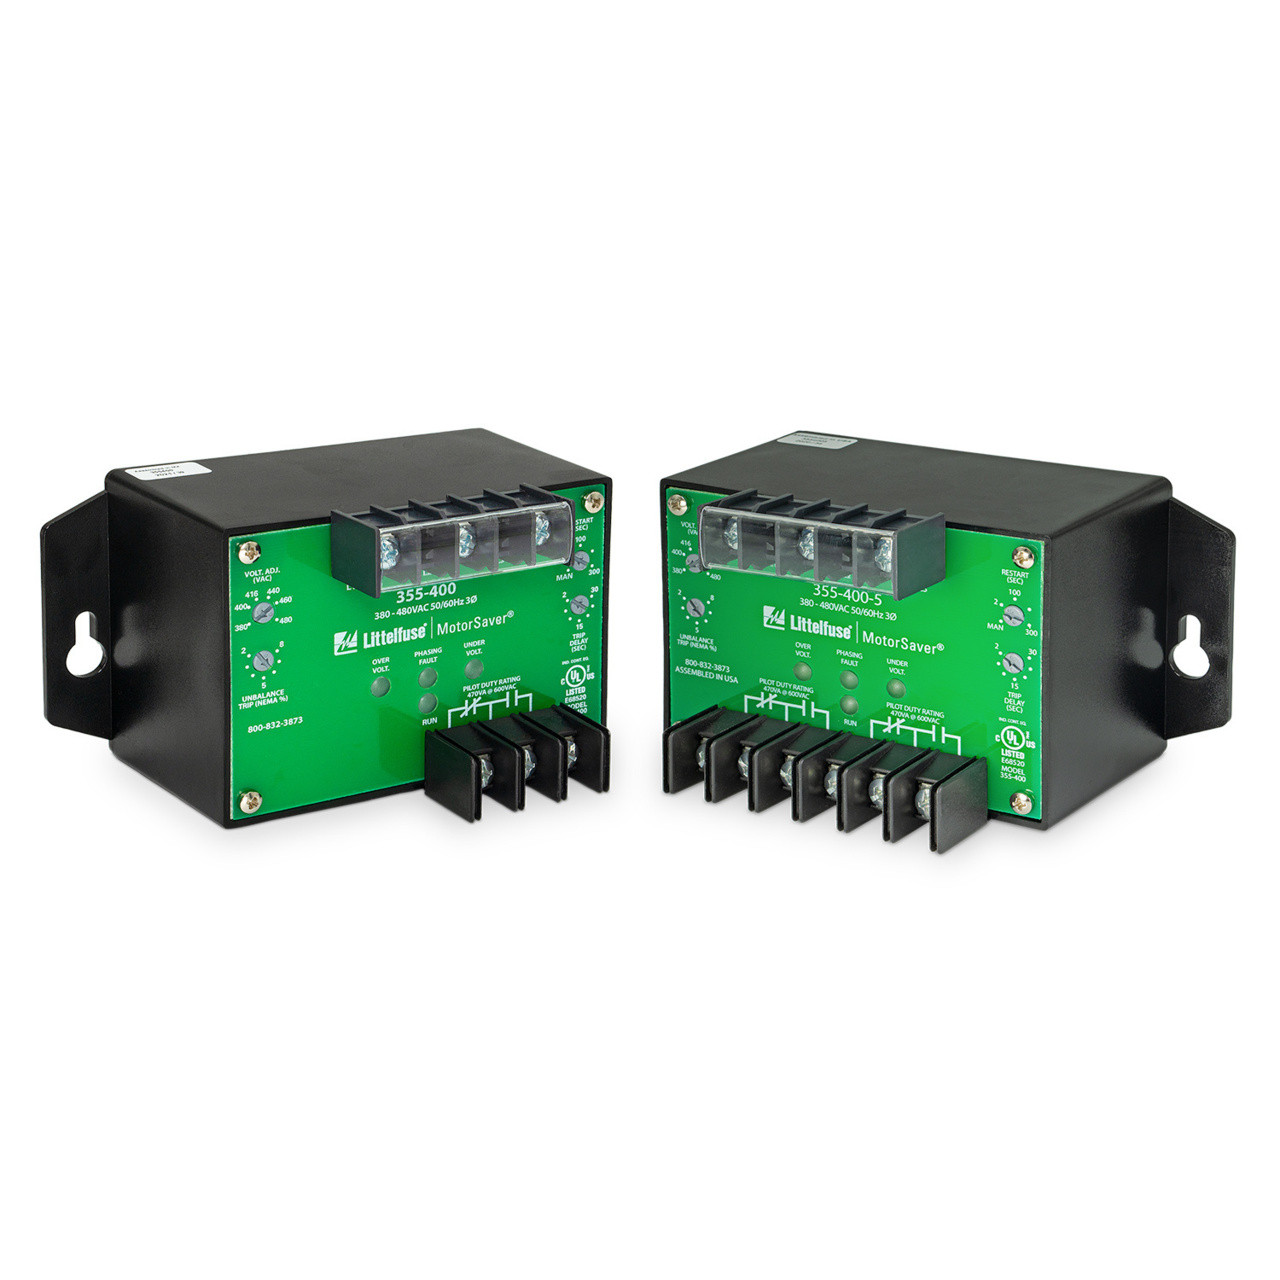 Littelfuse-Symcom 355200 Voltage Monitor Relays